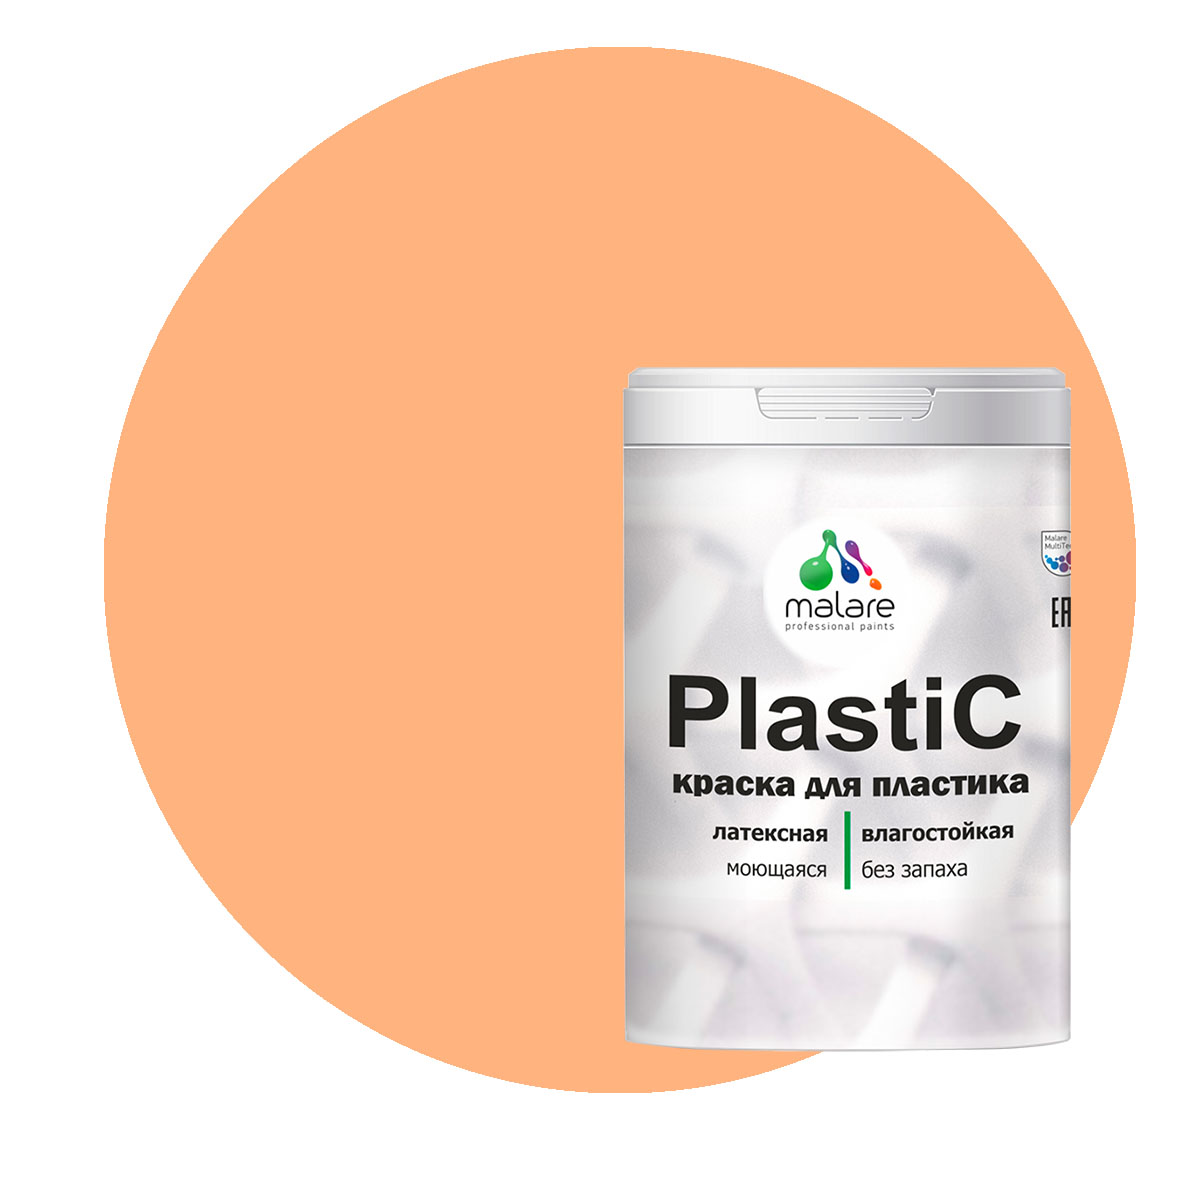 Краска Malare PlastiC для пластика, ПВХ, для сайдинга, свежая охра, 1 кг. краска malare plastic для пластика пвх для сайдинга оранжевый закат 2 кг